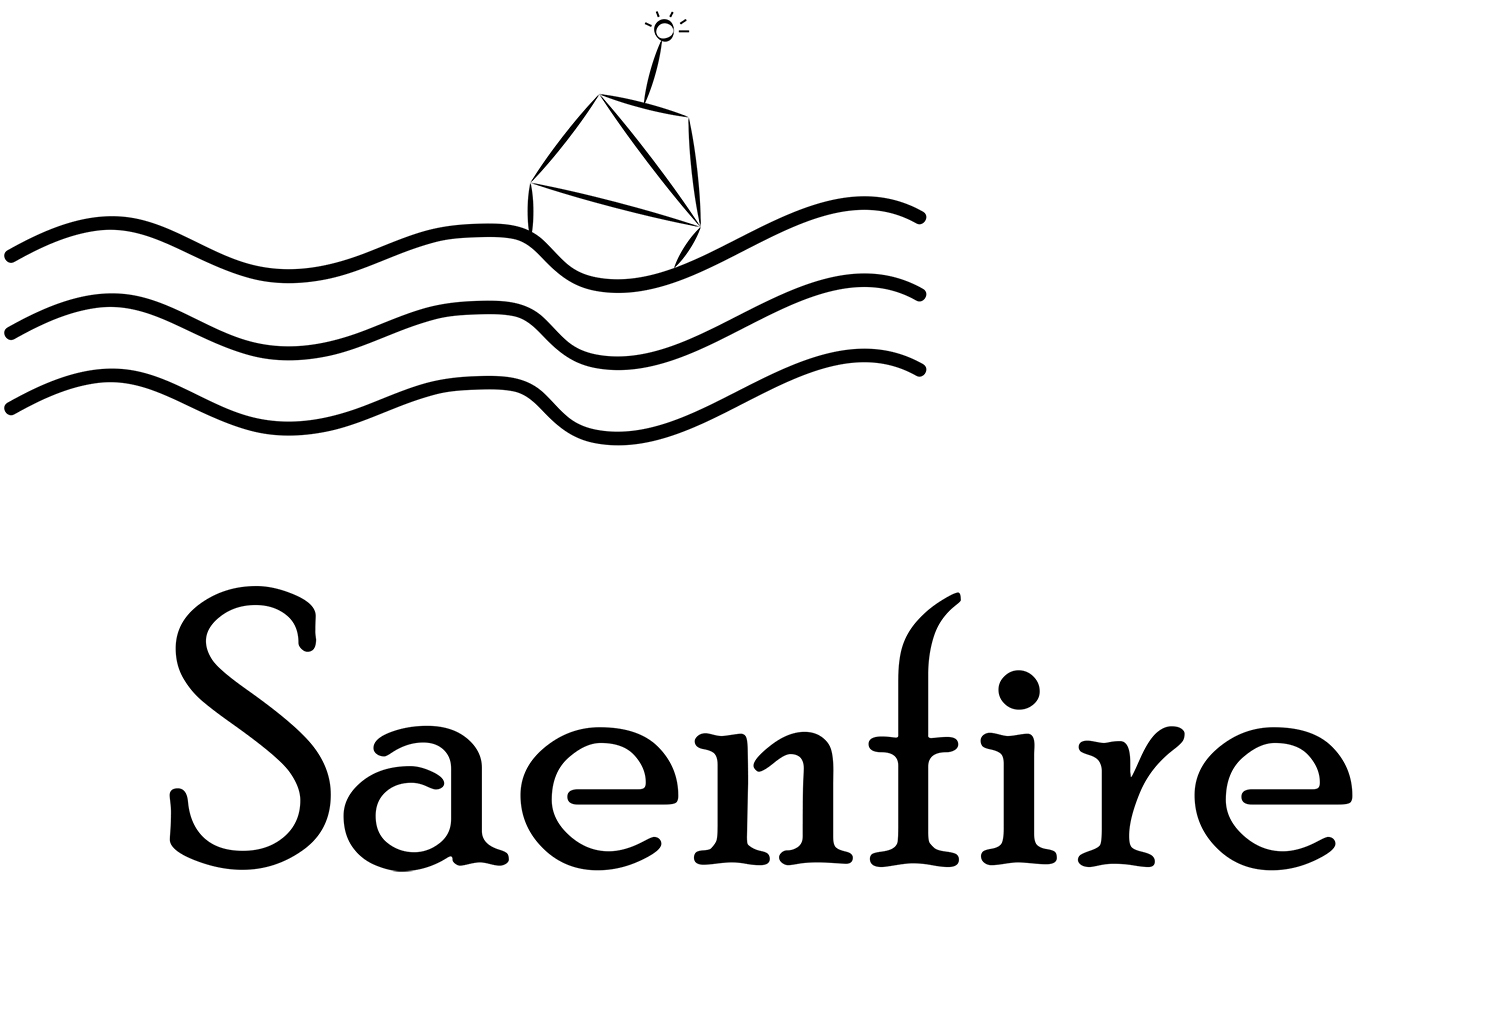 Saenfire Logo